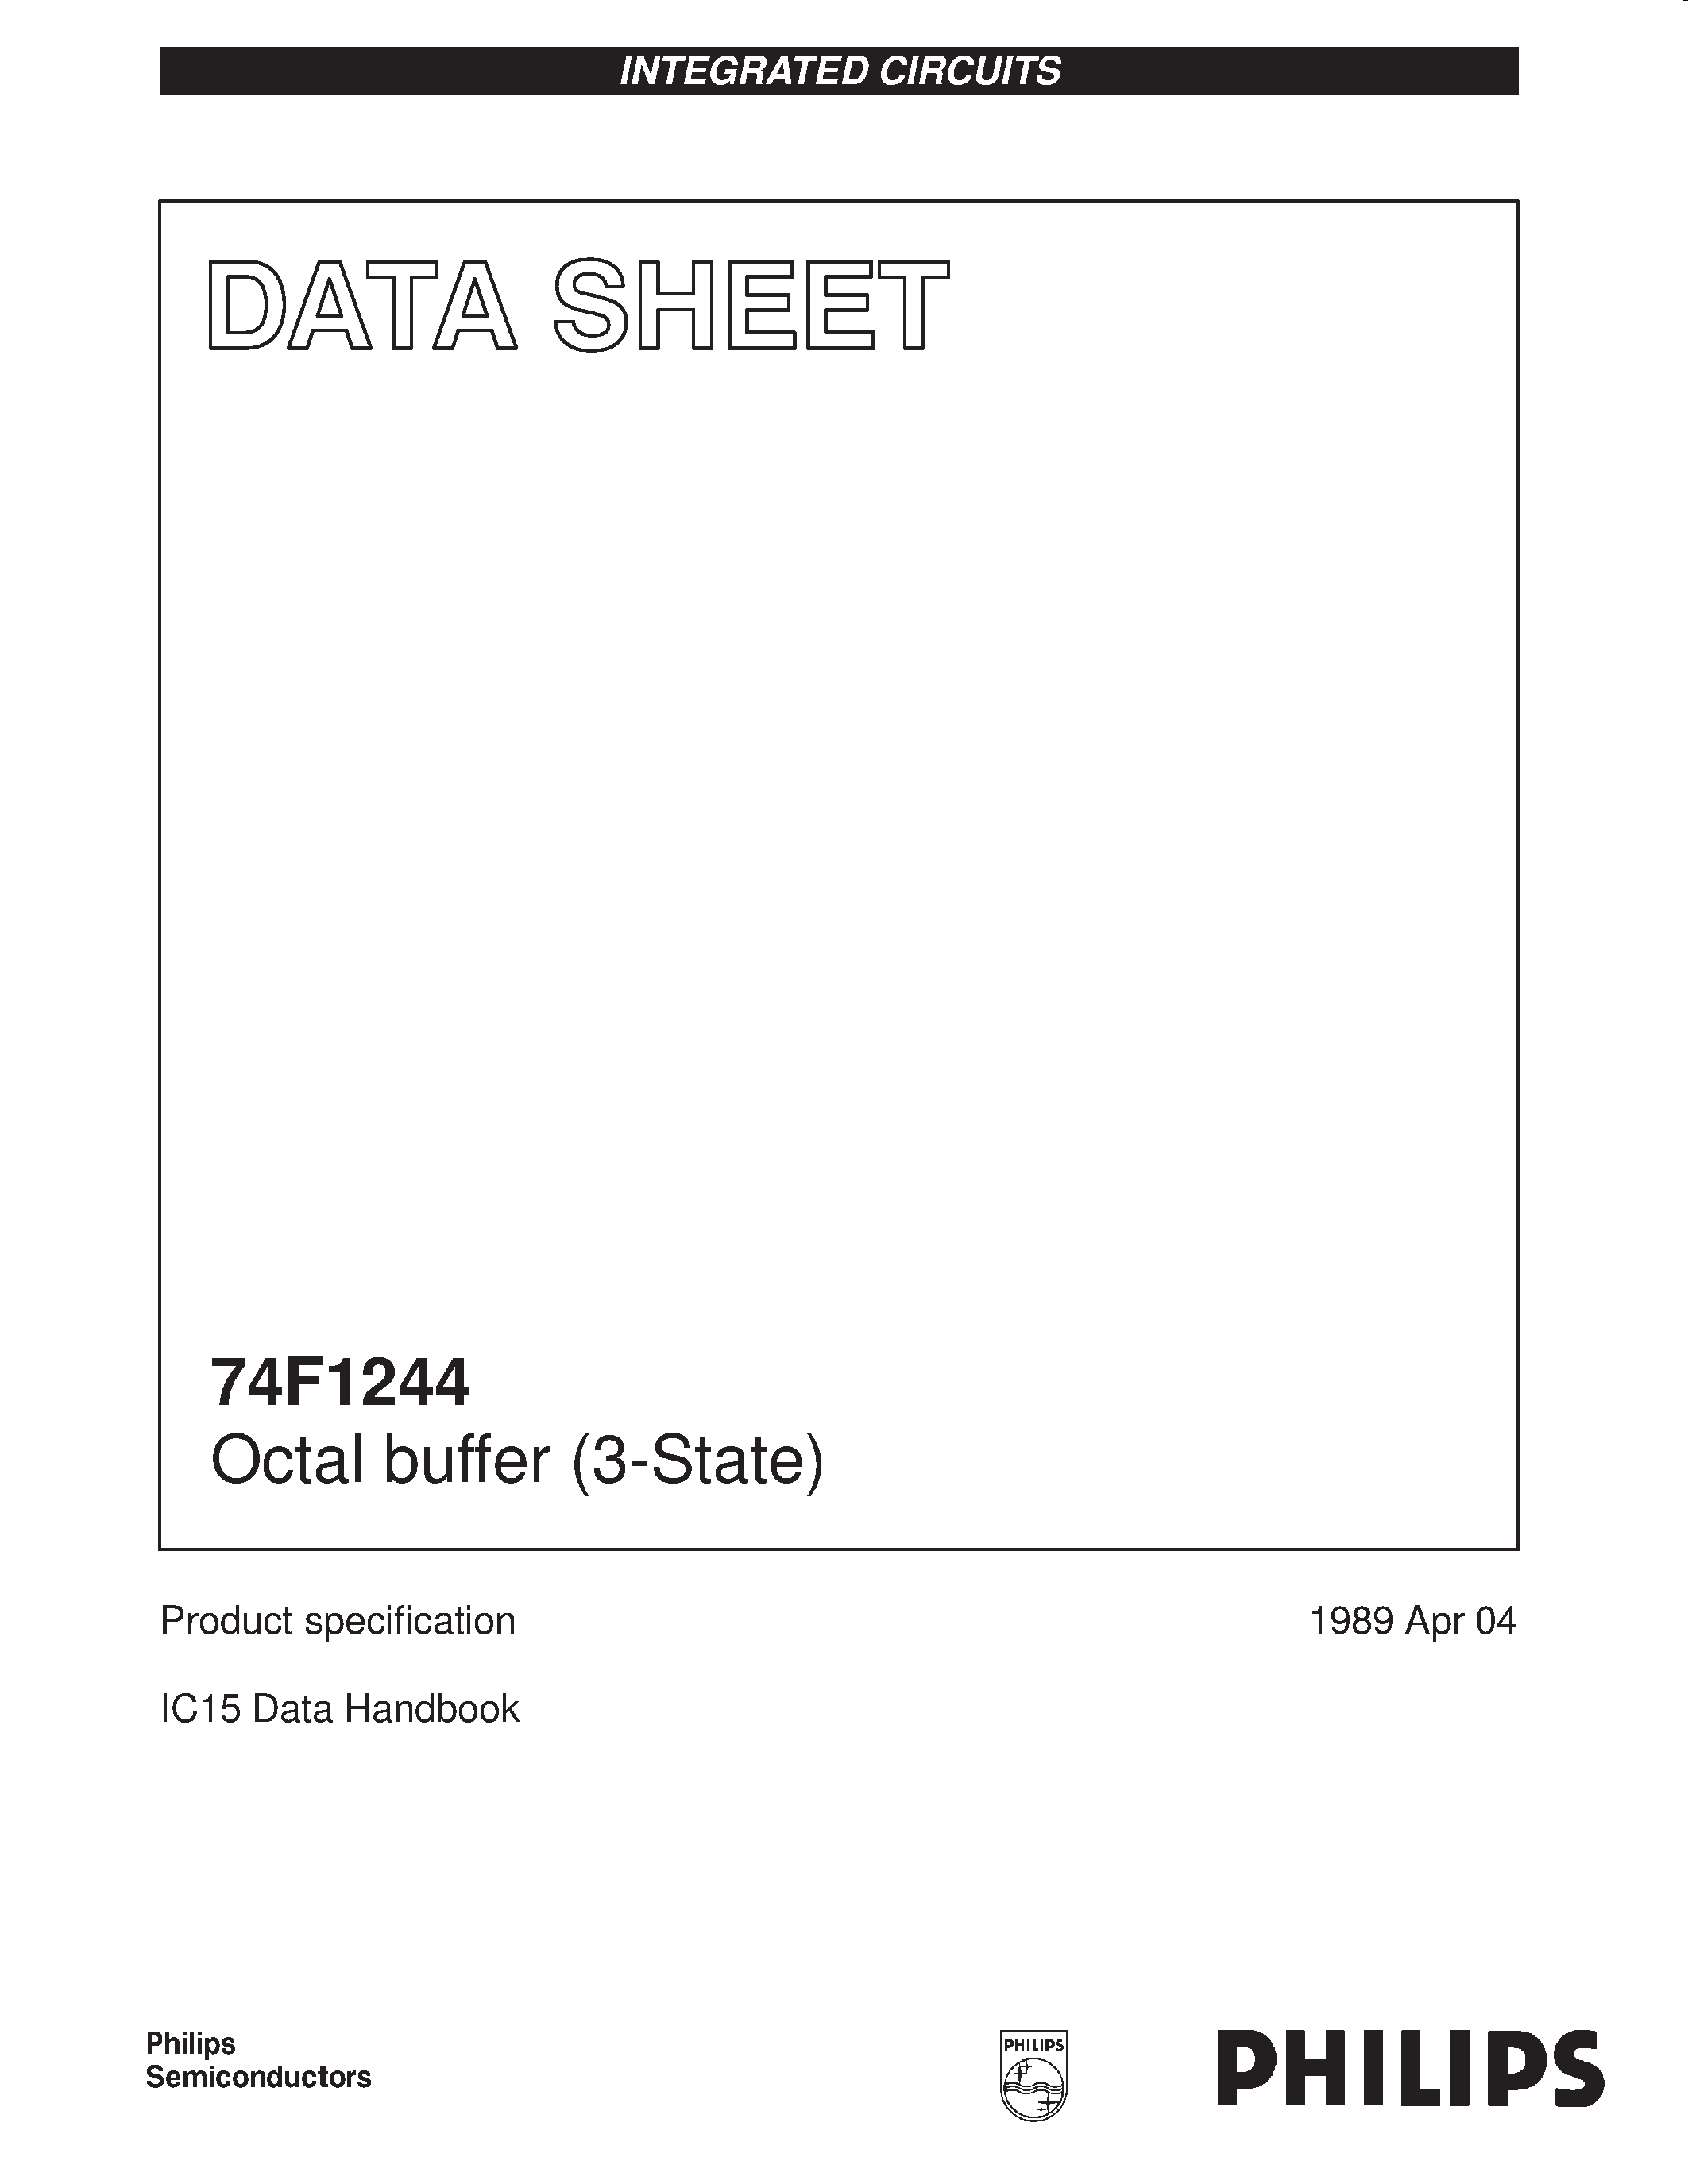 Даташит 74F1244 - Octal buffer 3-State страница 1